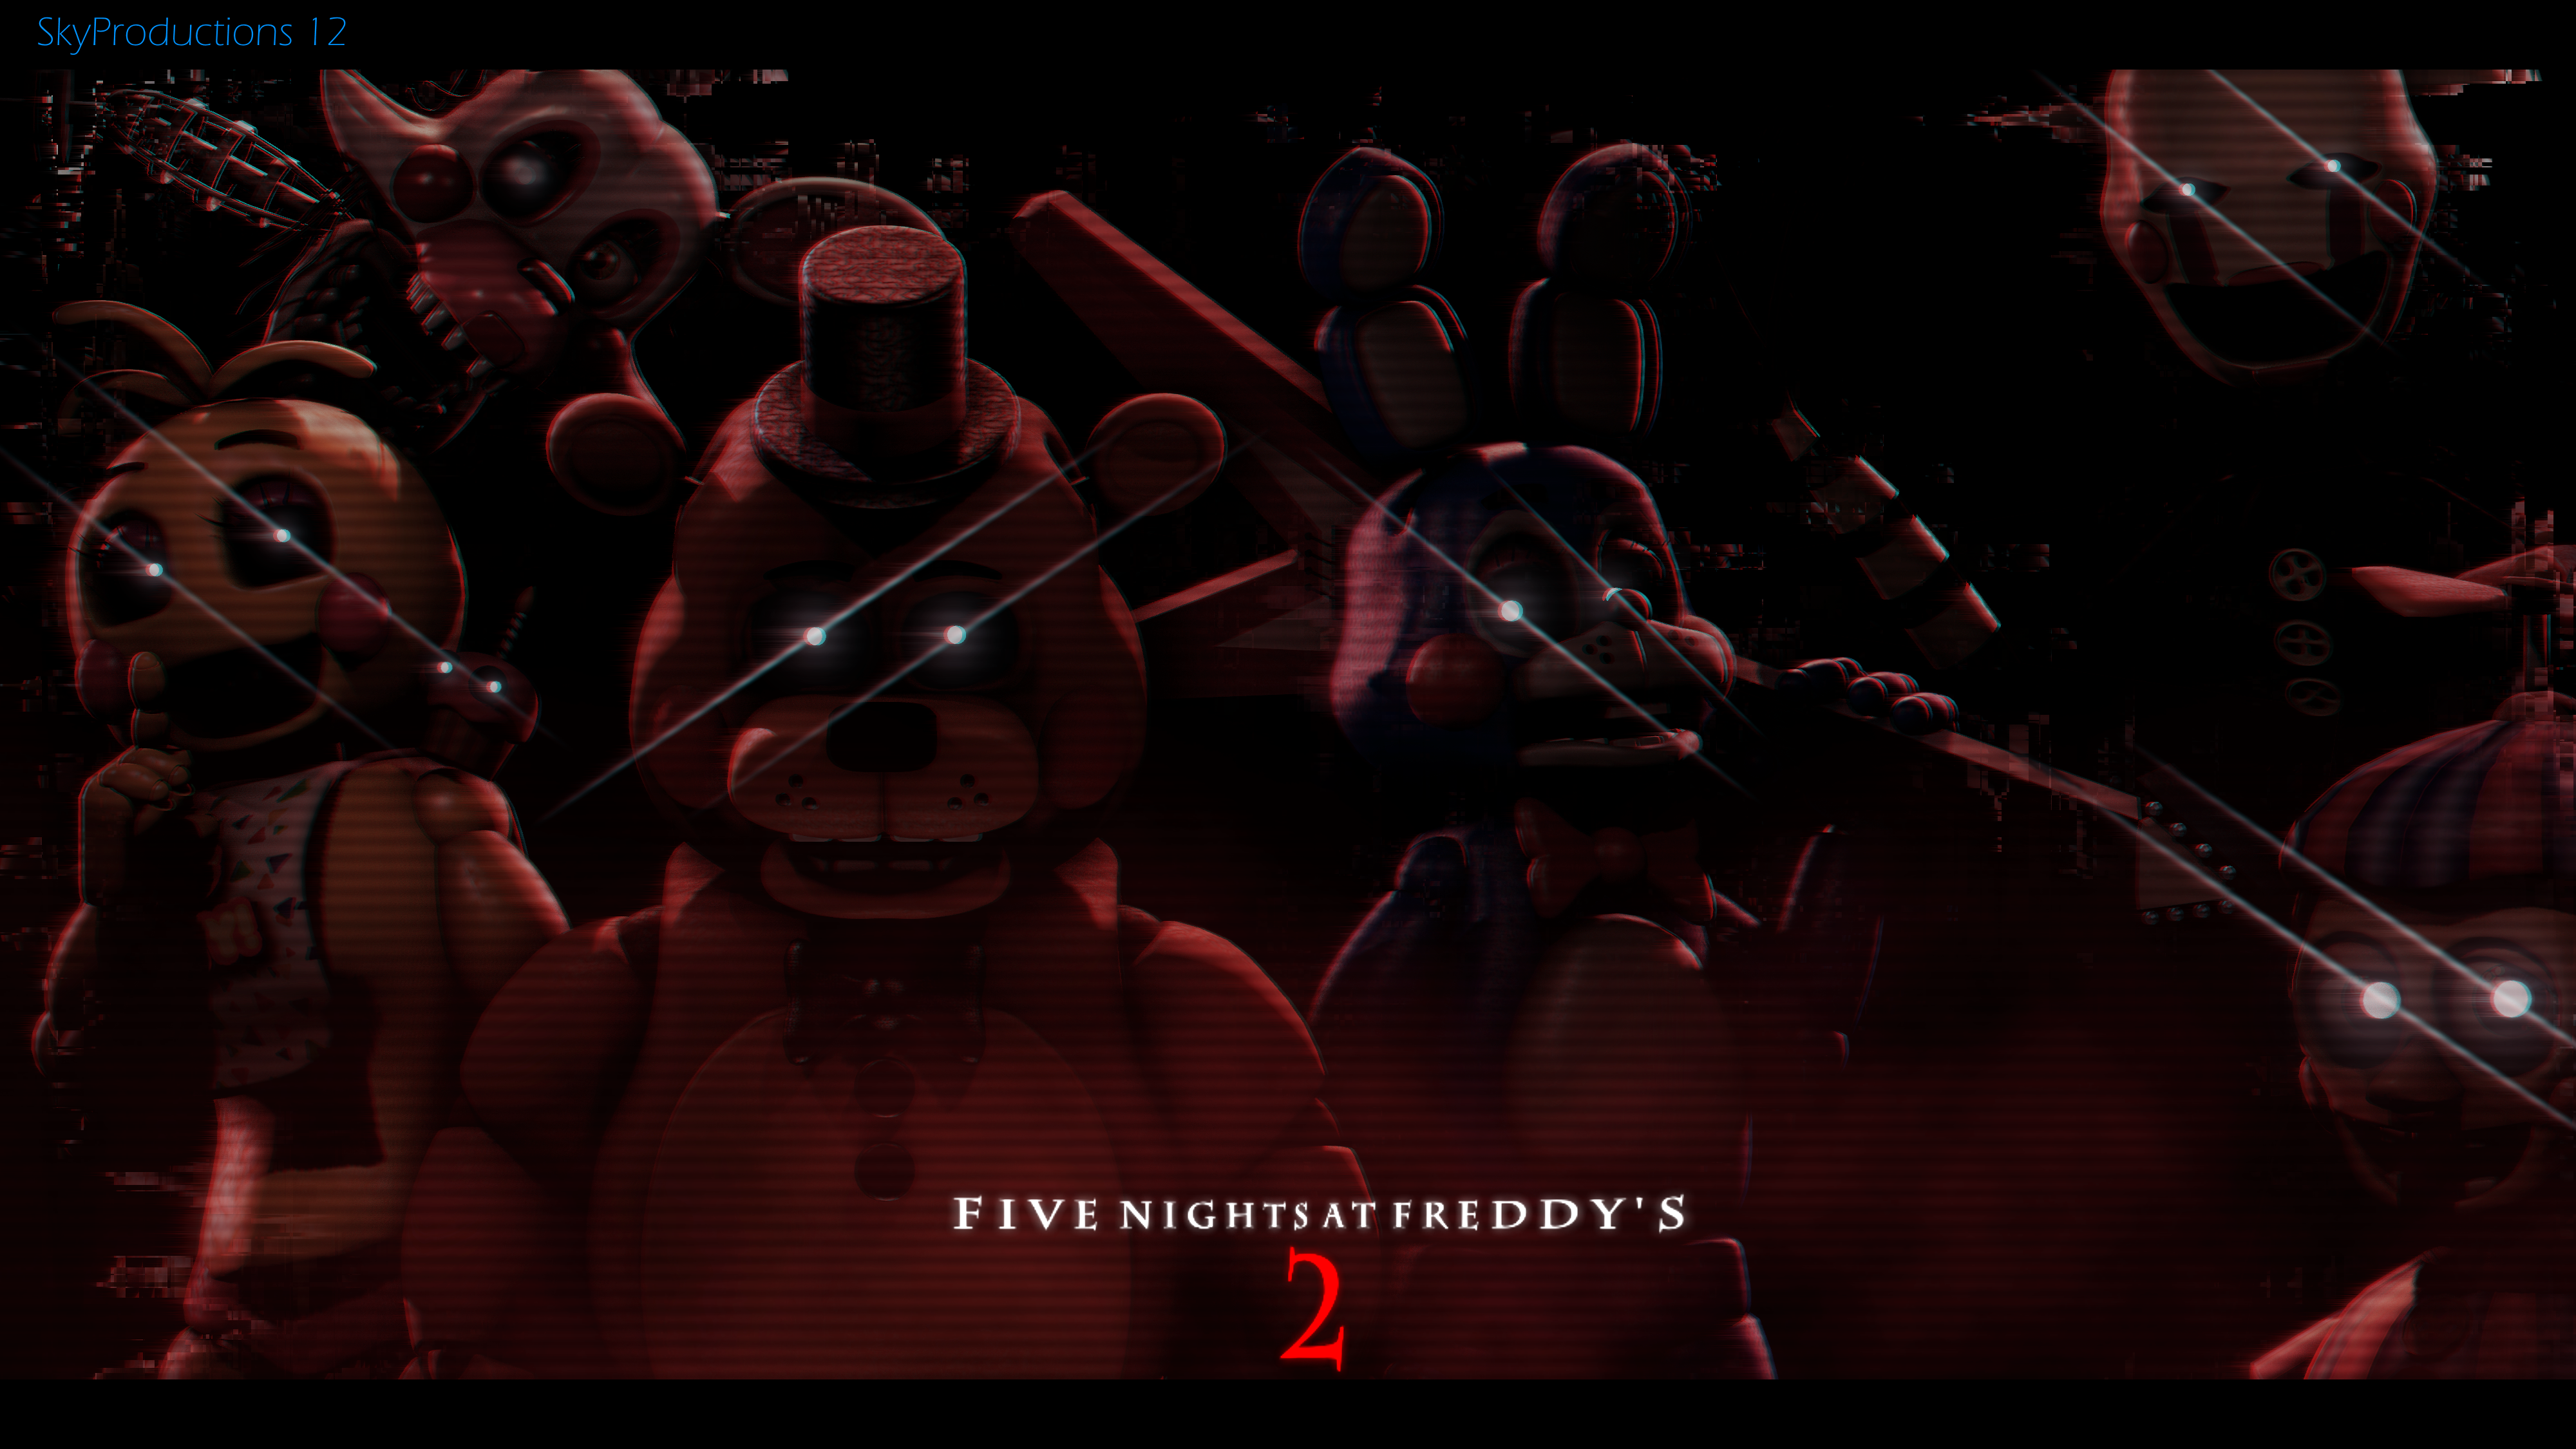 SFM FNAF] Five Nights at Freddy's 2 Wallpaper 4K by SkyProductions12 on  DeviantArt